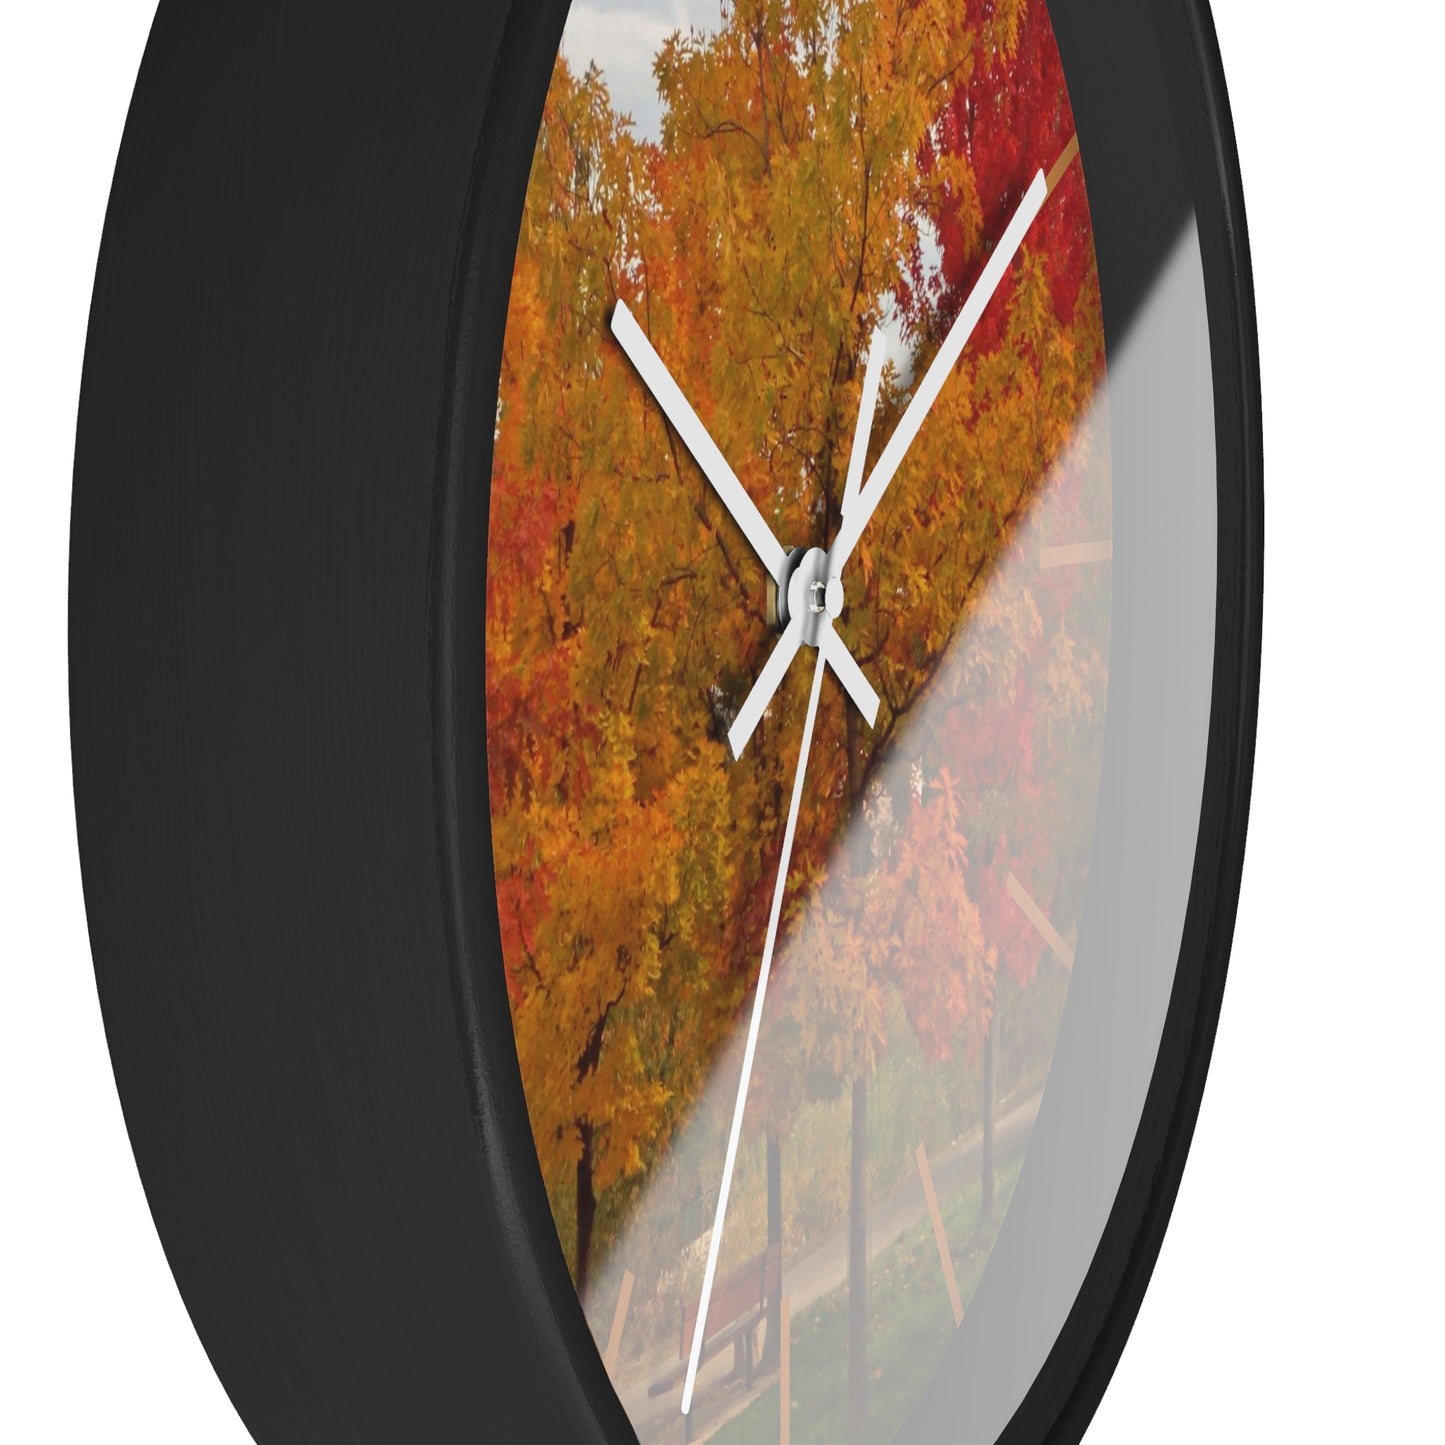 Autumn Serenity Wall Clock